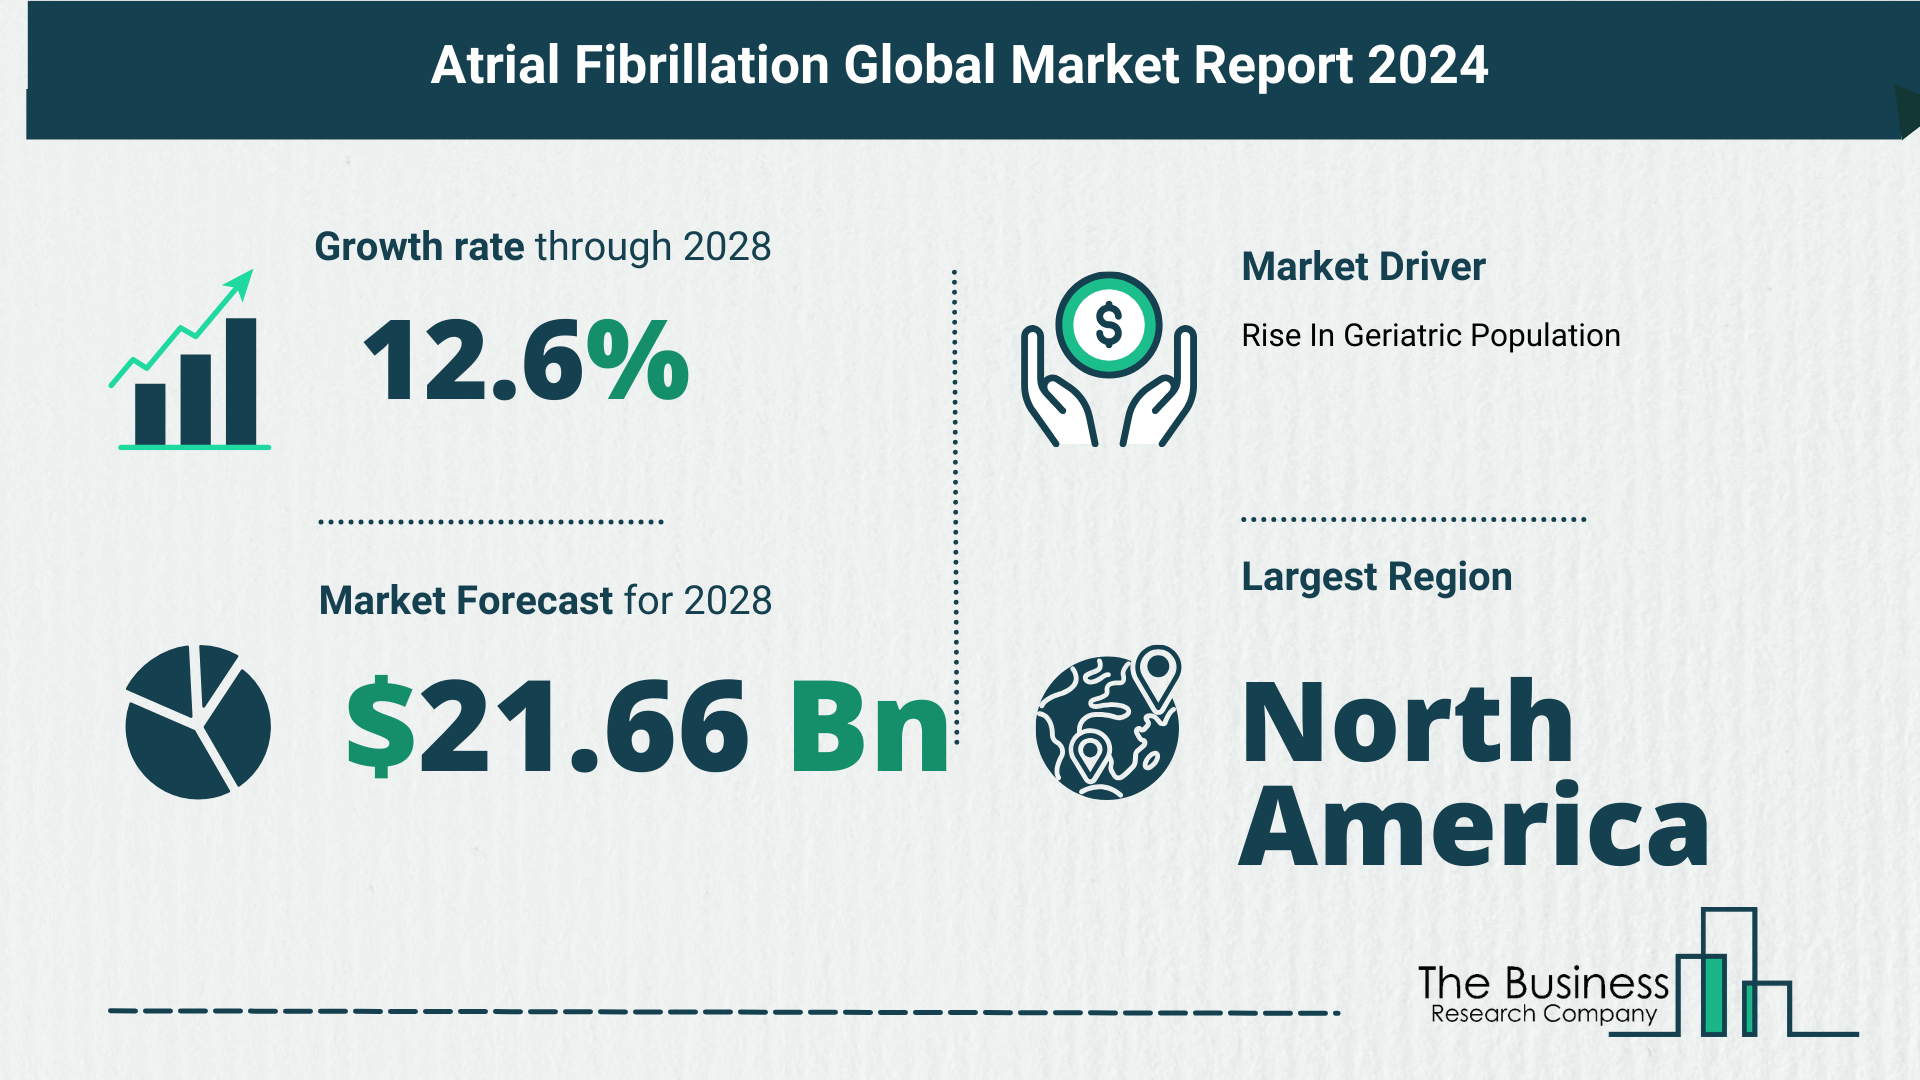 Global Atrial Fibrillation Market